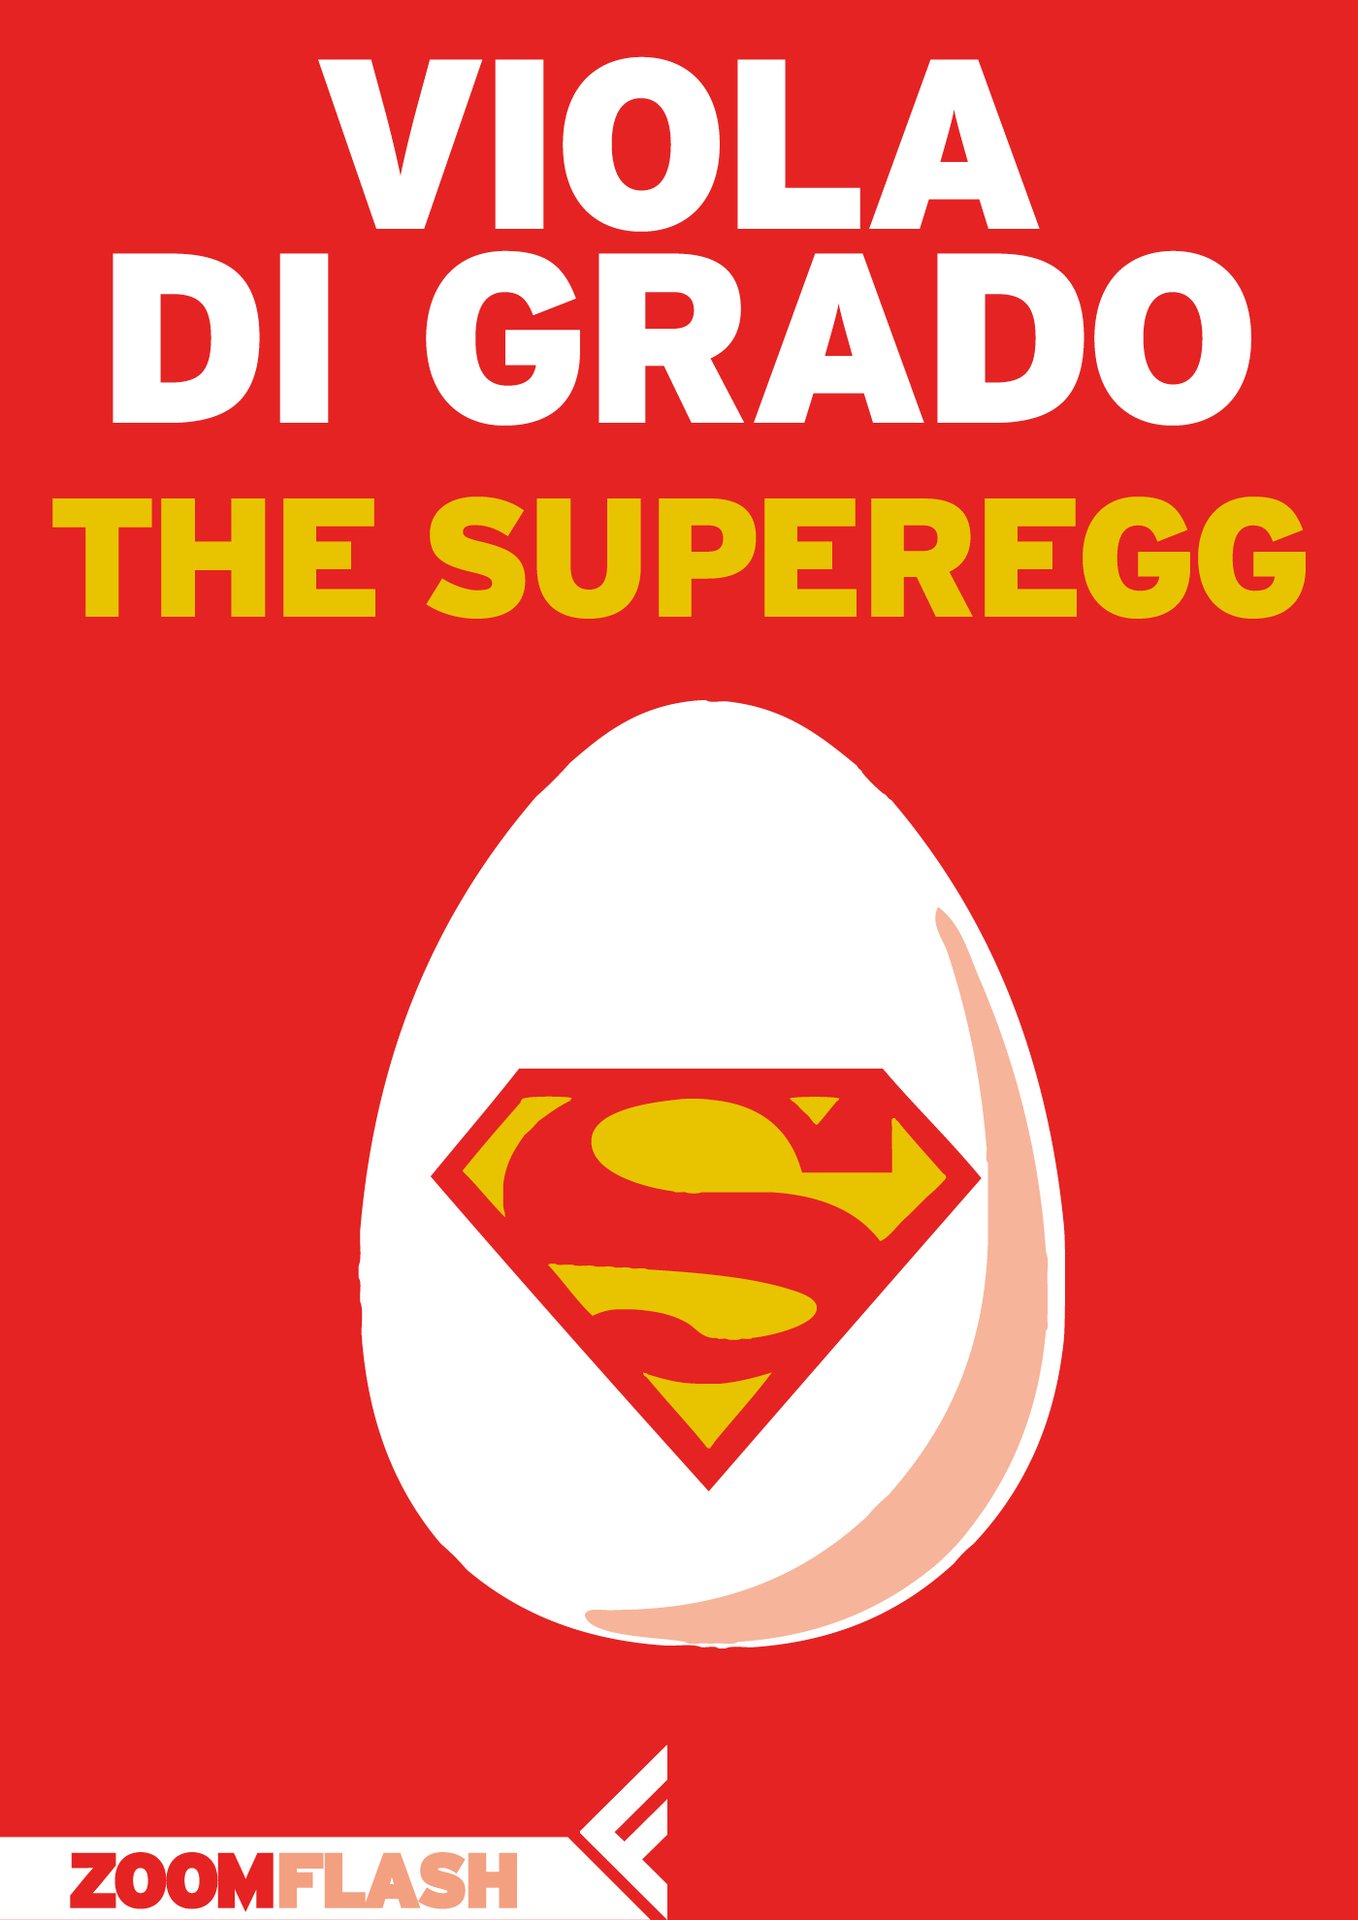 The Superegg